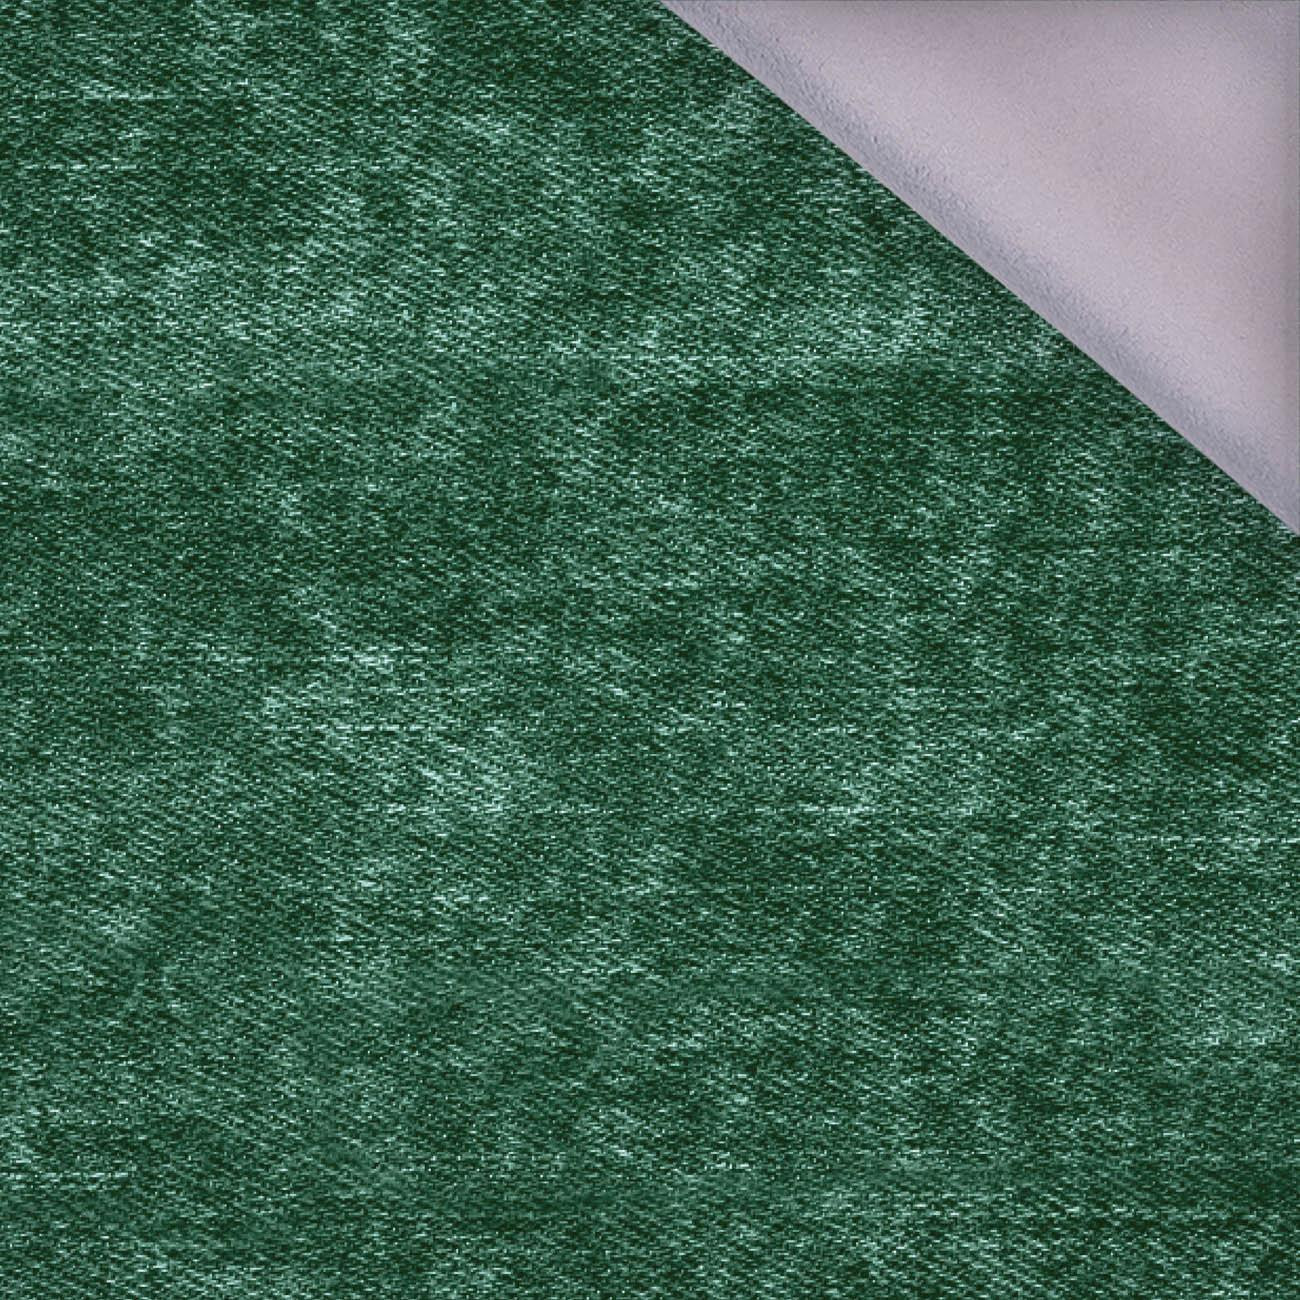 VINTAGE LOOK JEANS (bottle green) - softshell